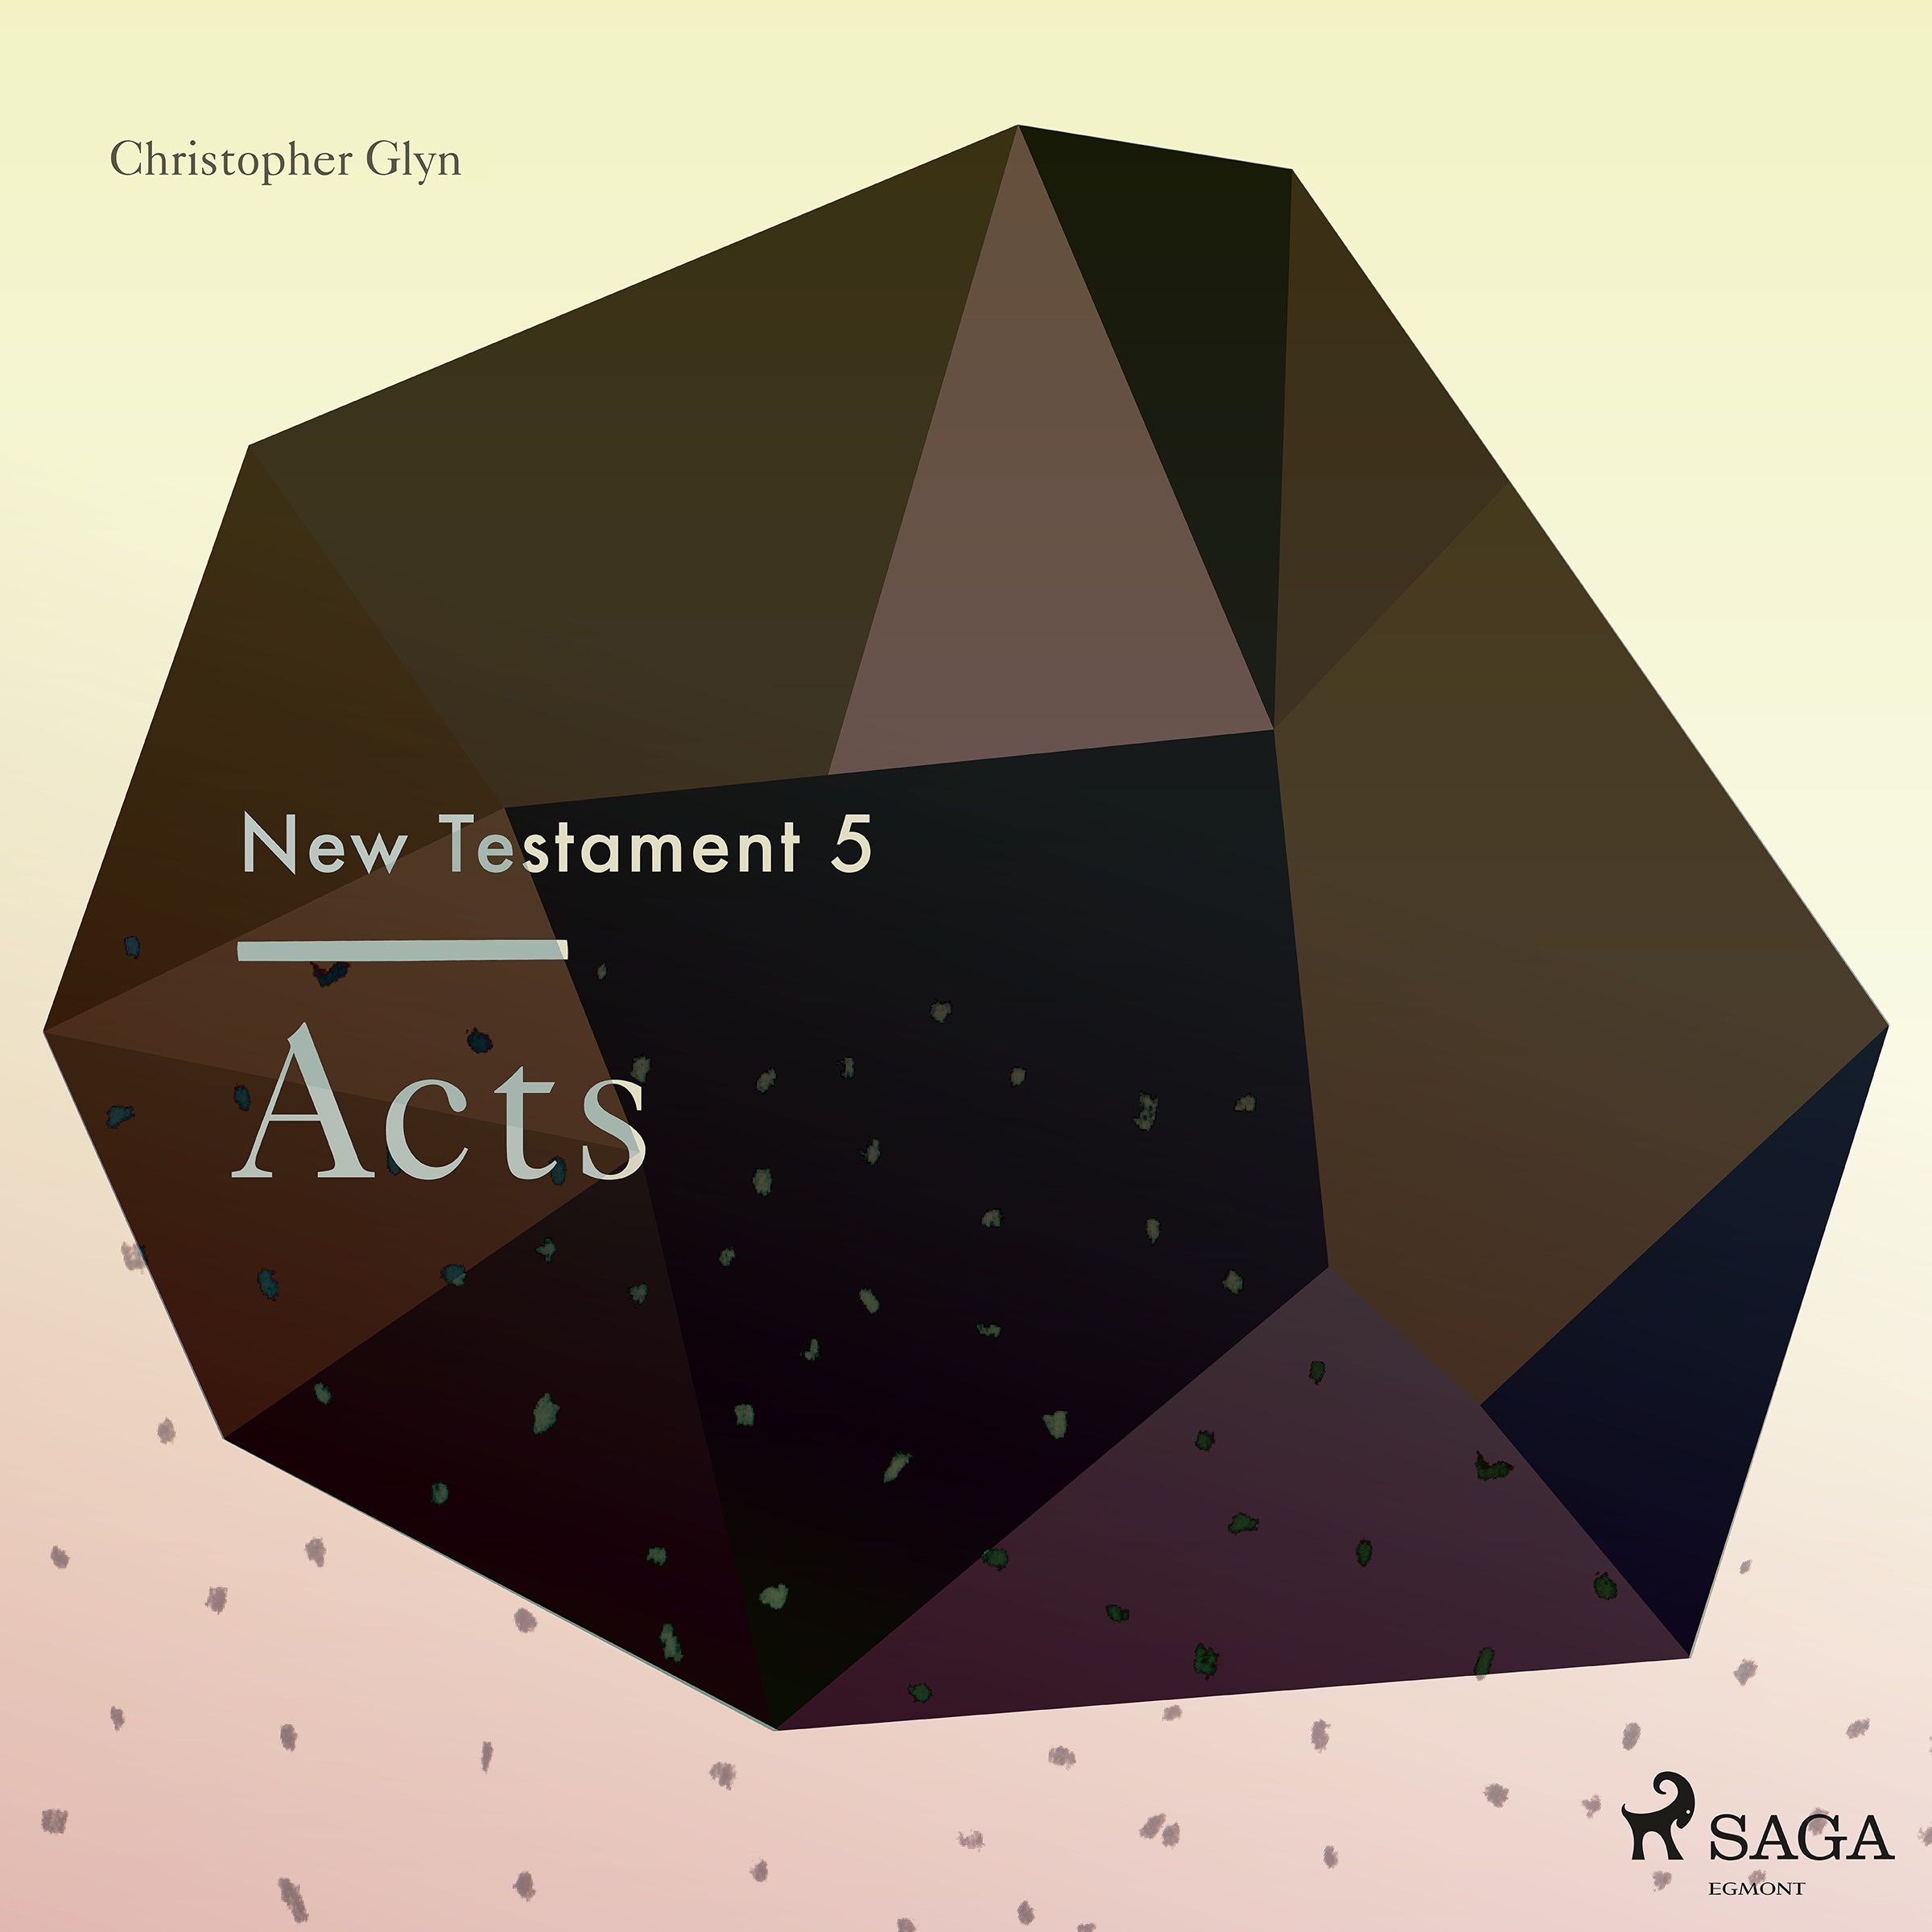 The New Testament 5 - Acts, ljudbok av Christopher Glyn